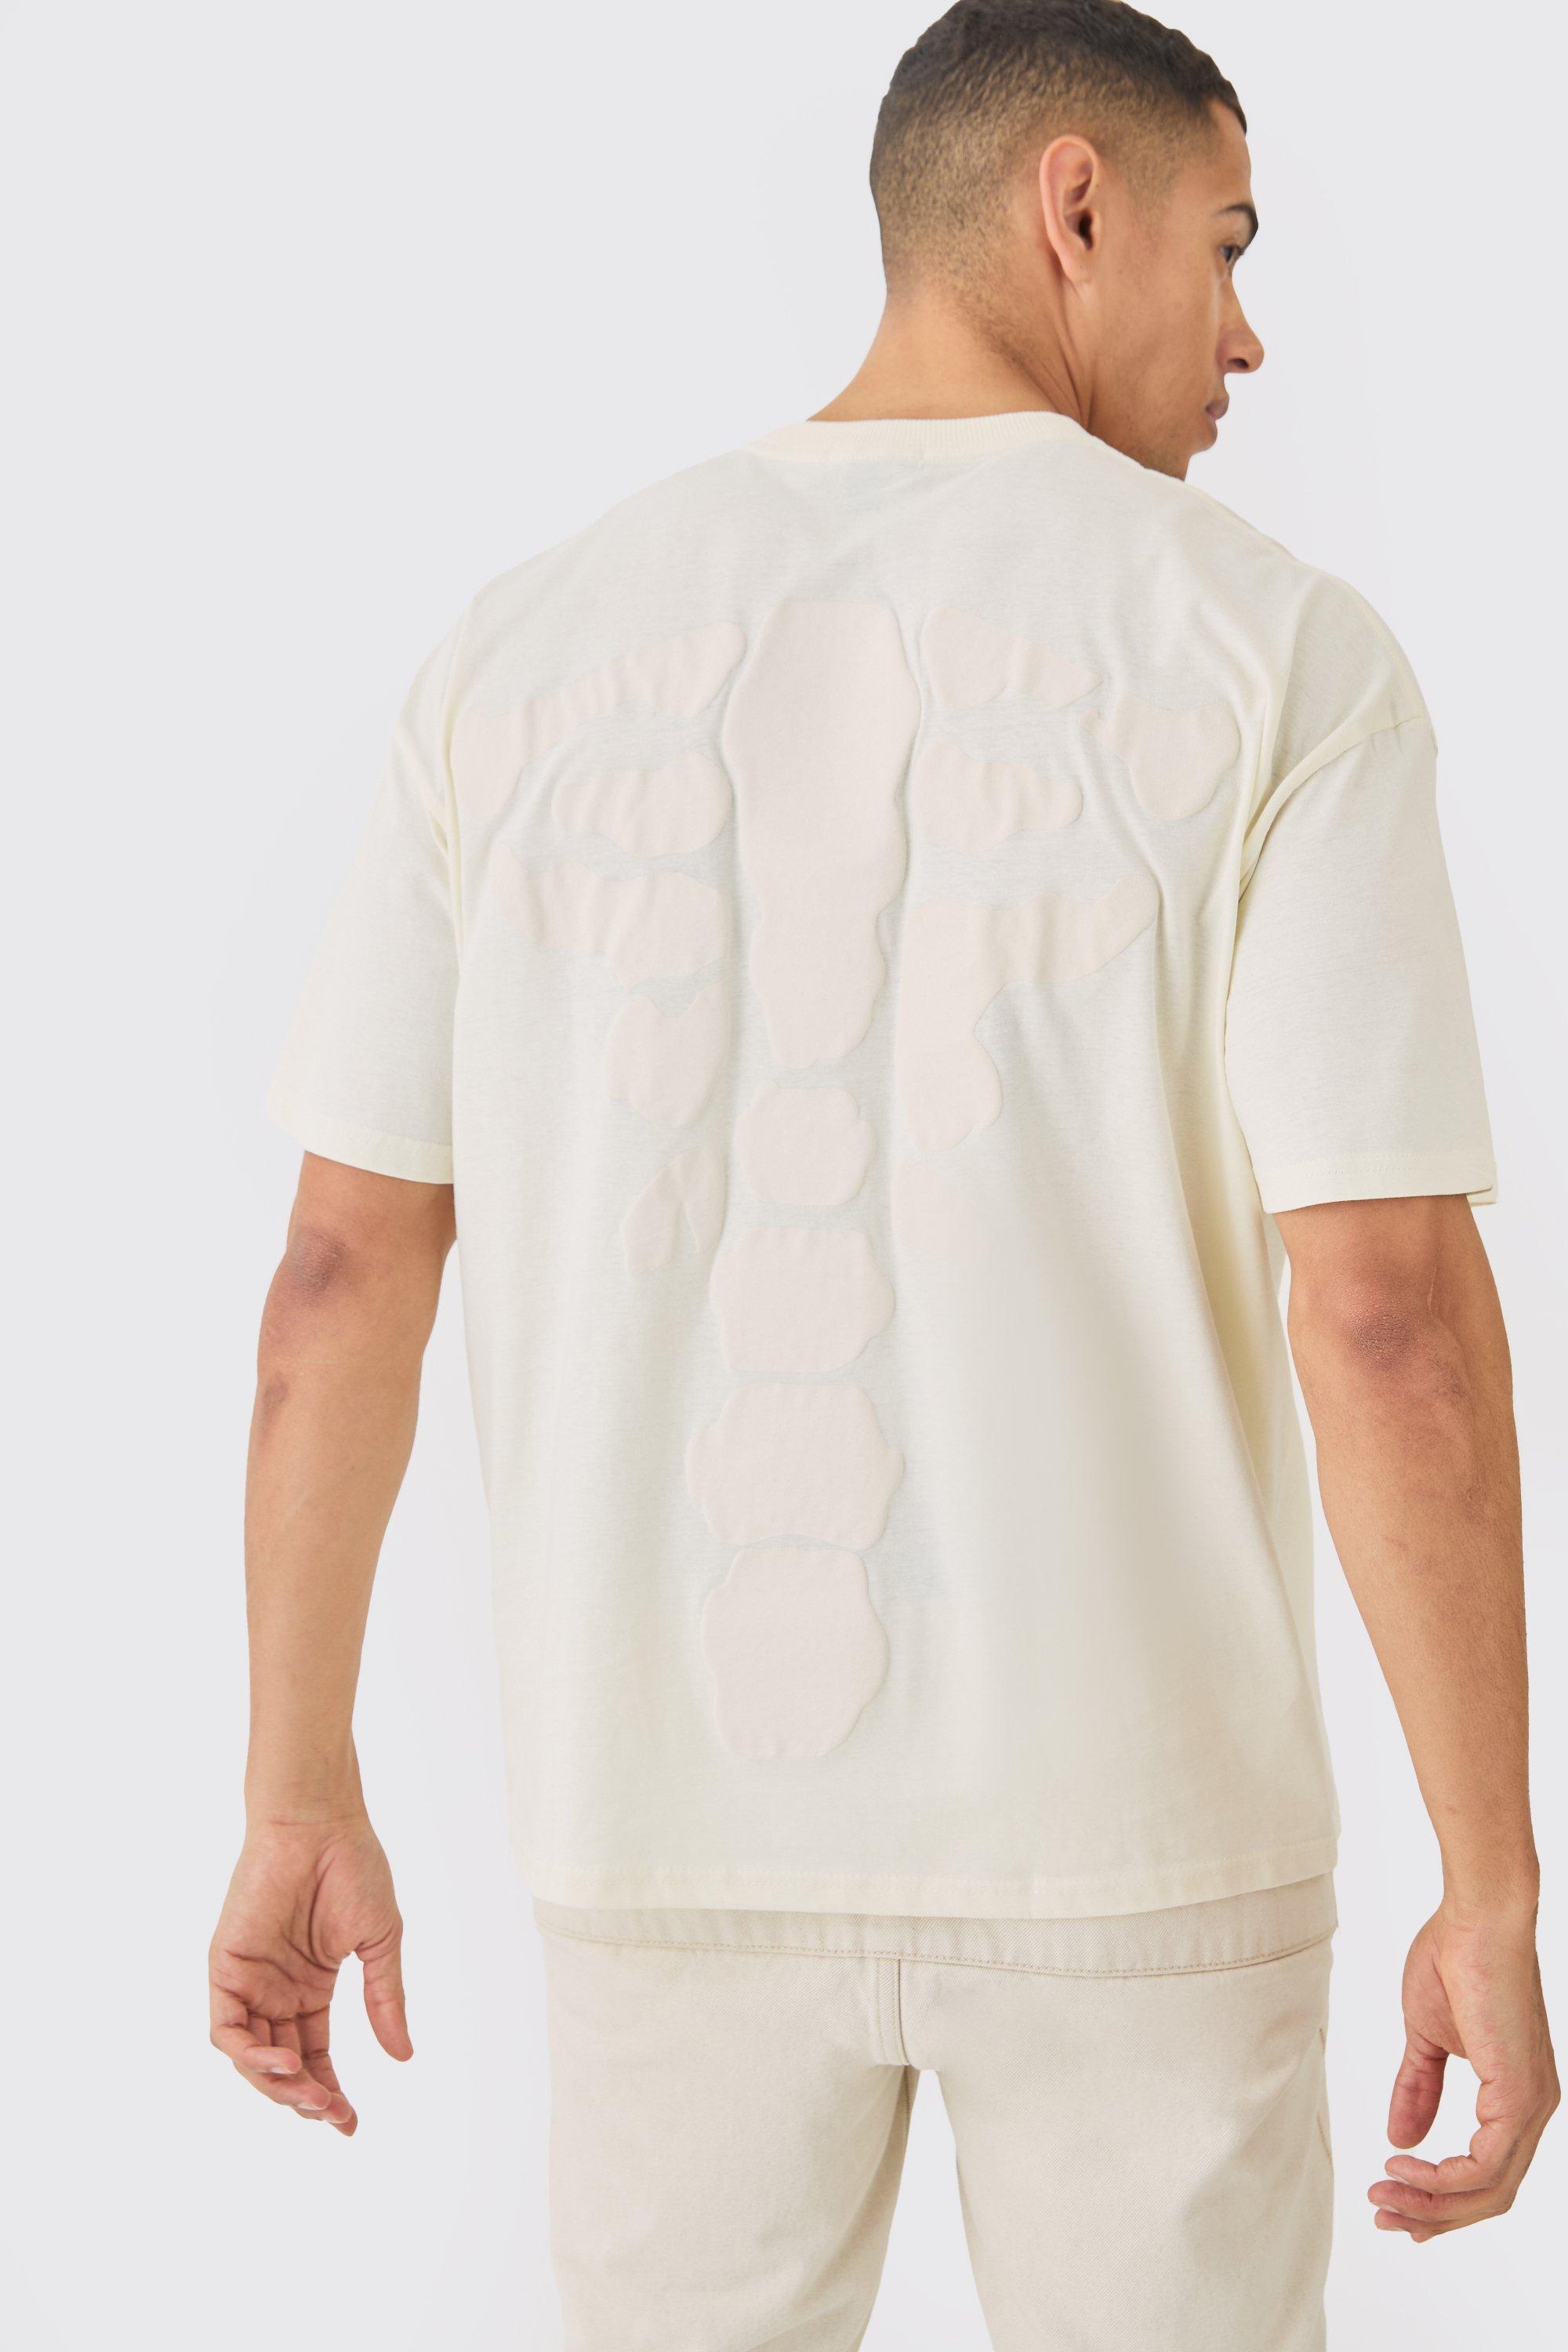 Image of Oversized Skeleton Back Print T-shirt, Cream